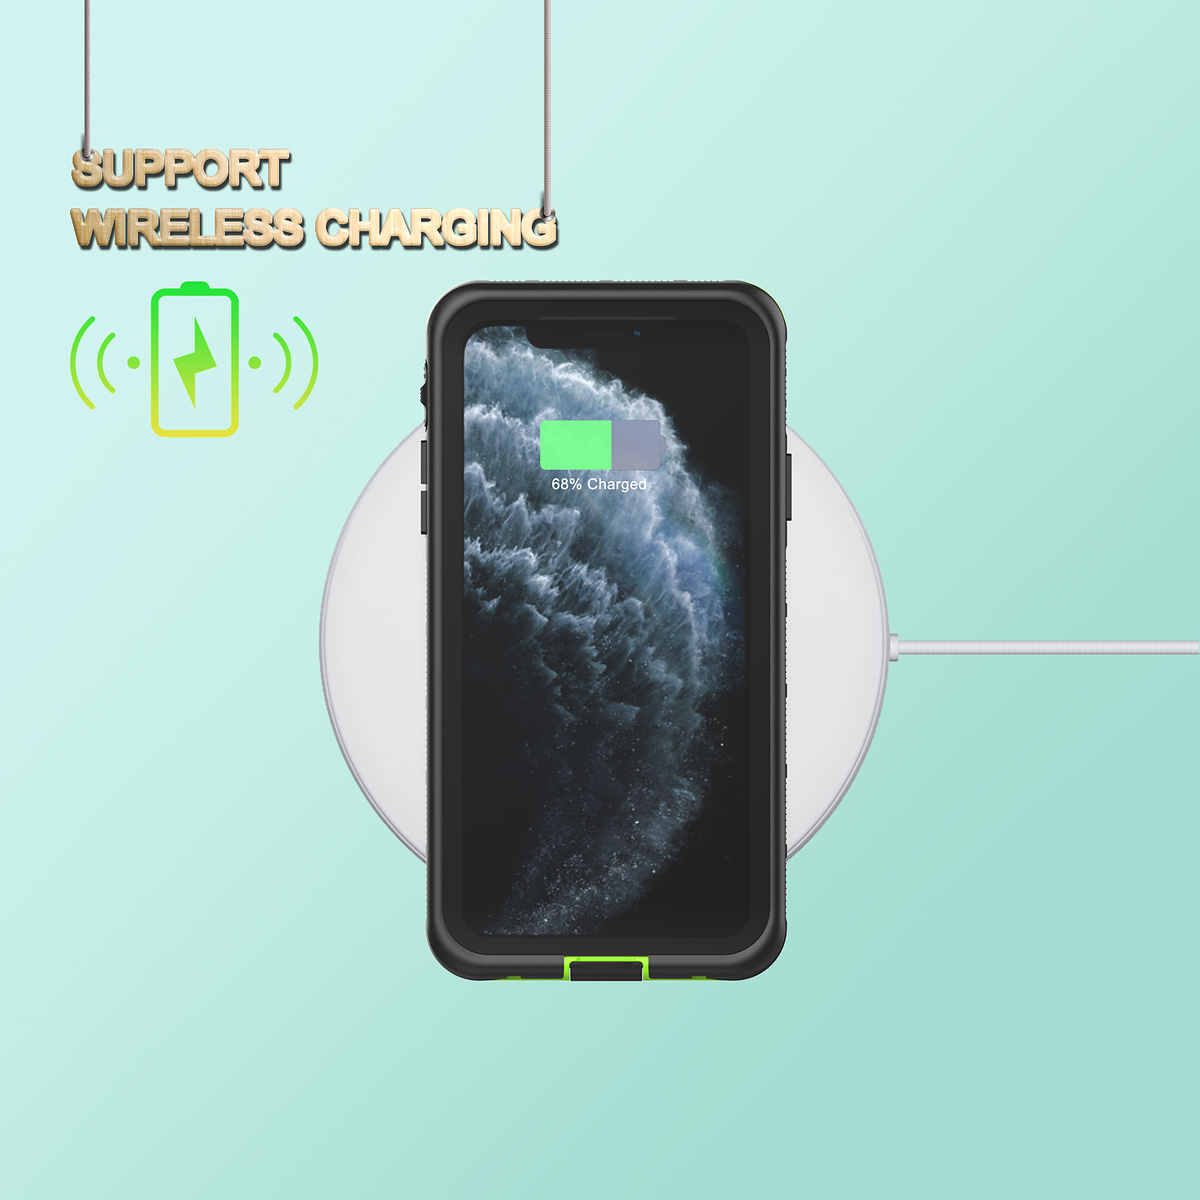 Vattentätt TPU IPX68 Skal till iPhone 11 Pro Max, svart